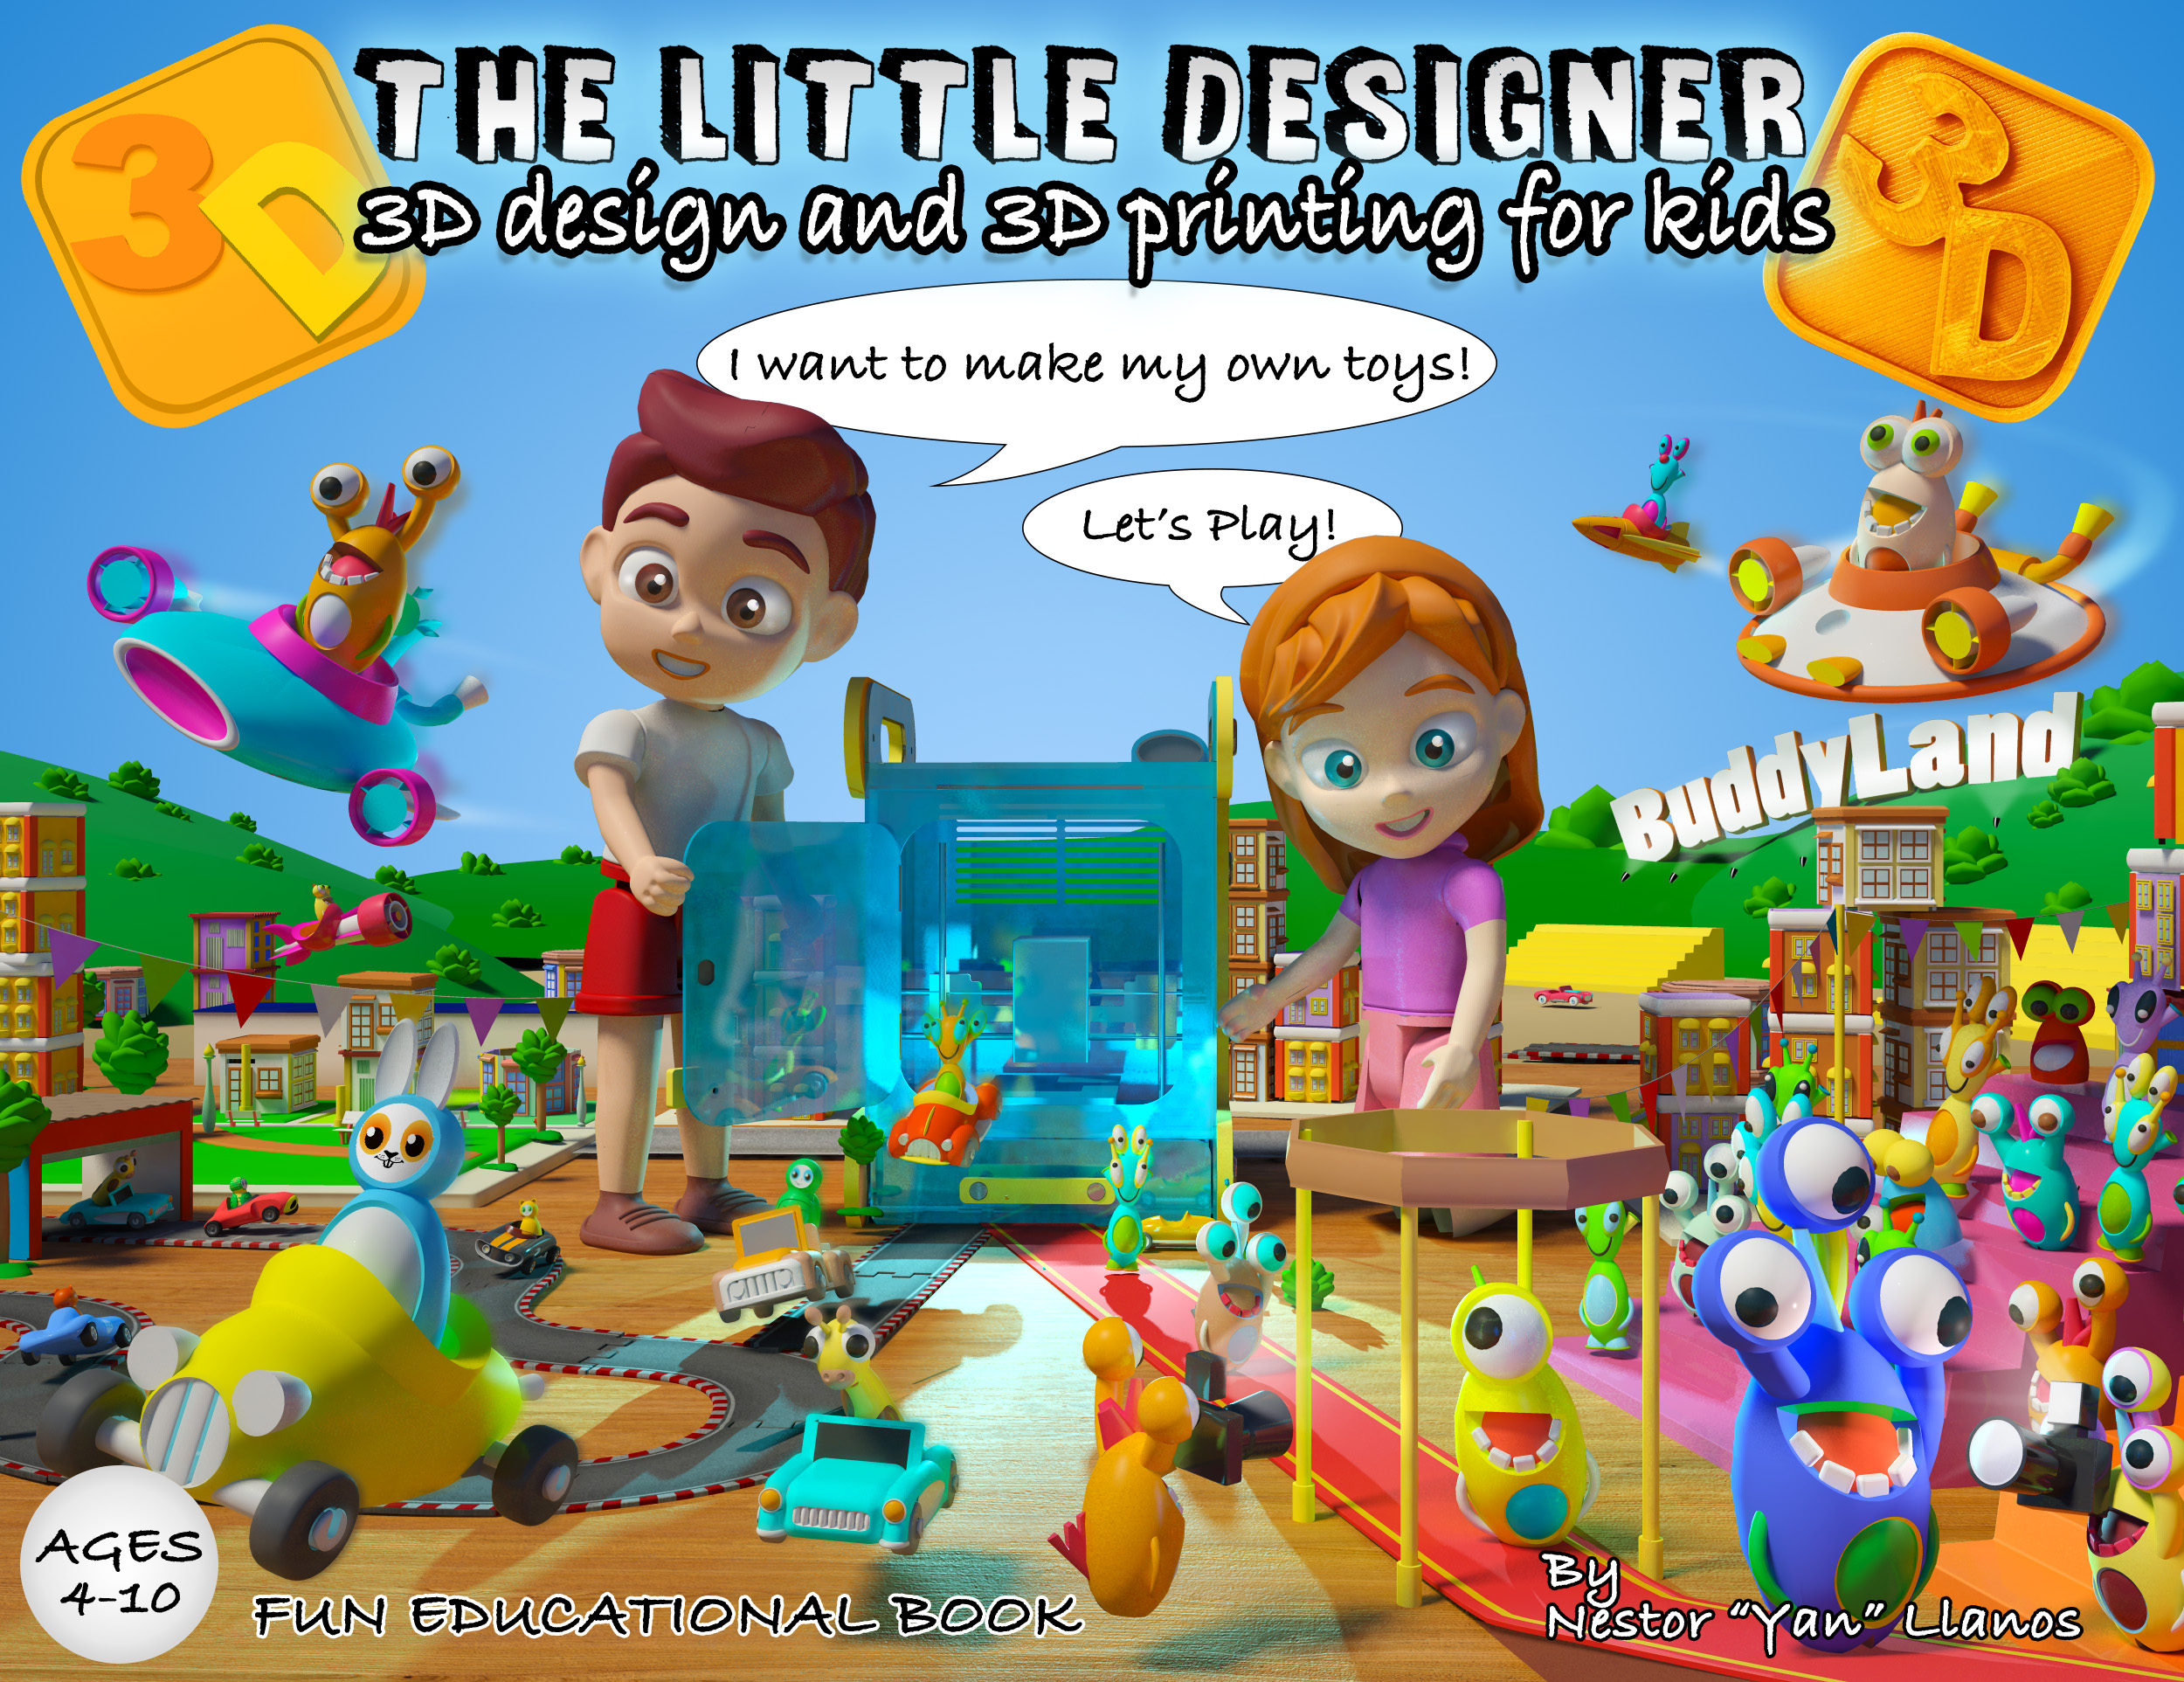 The Little Designer " Buddyland"